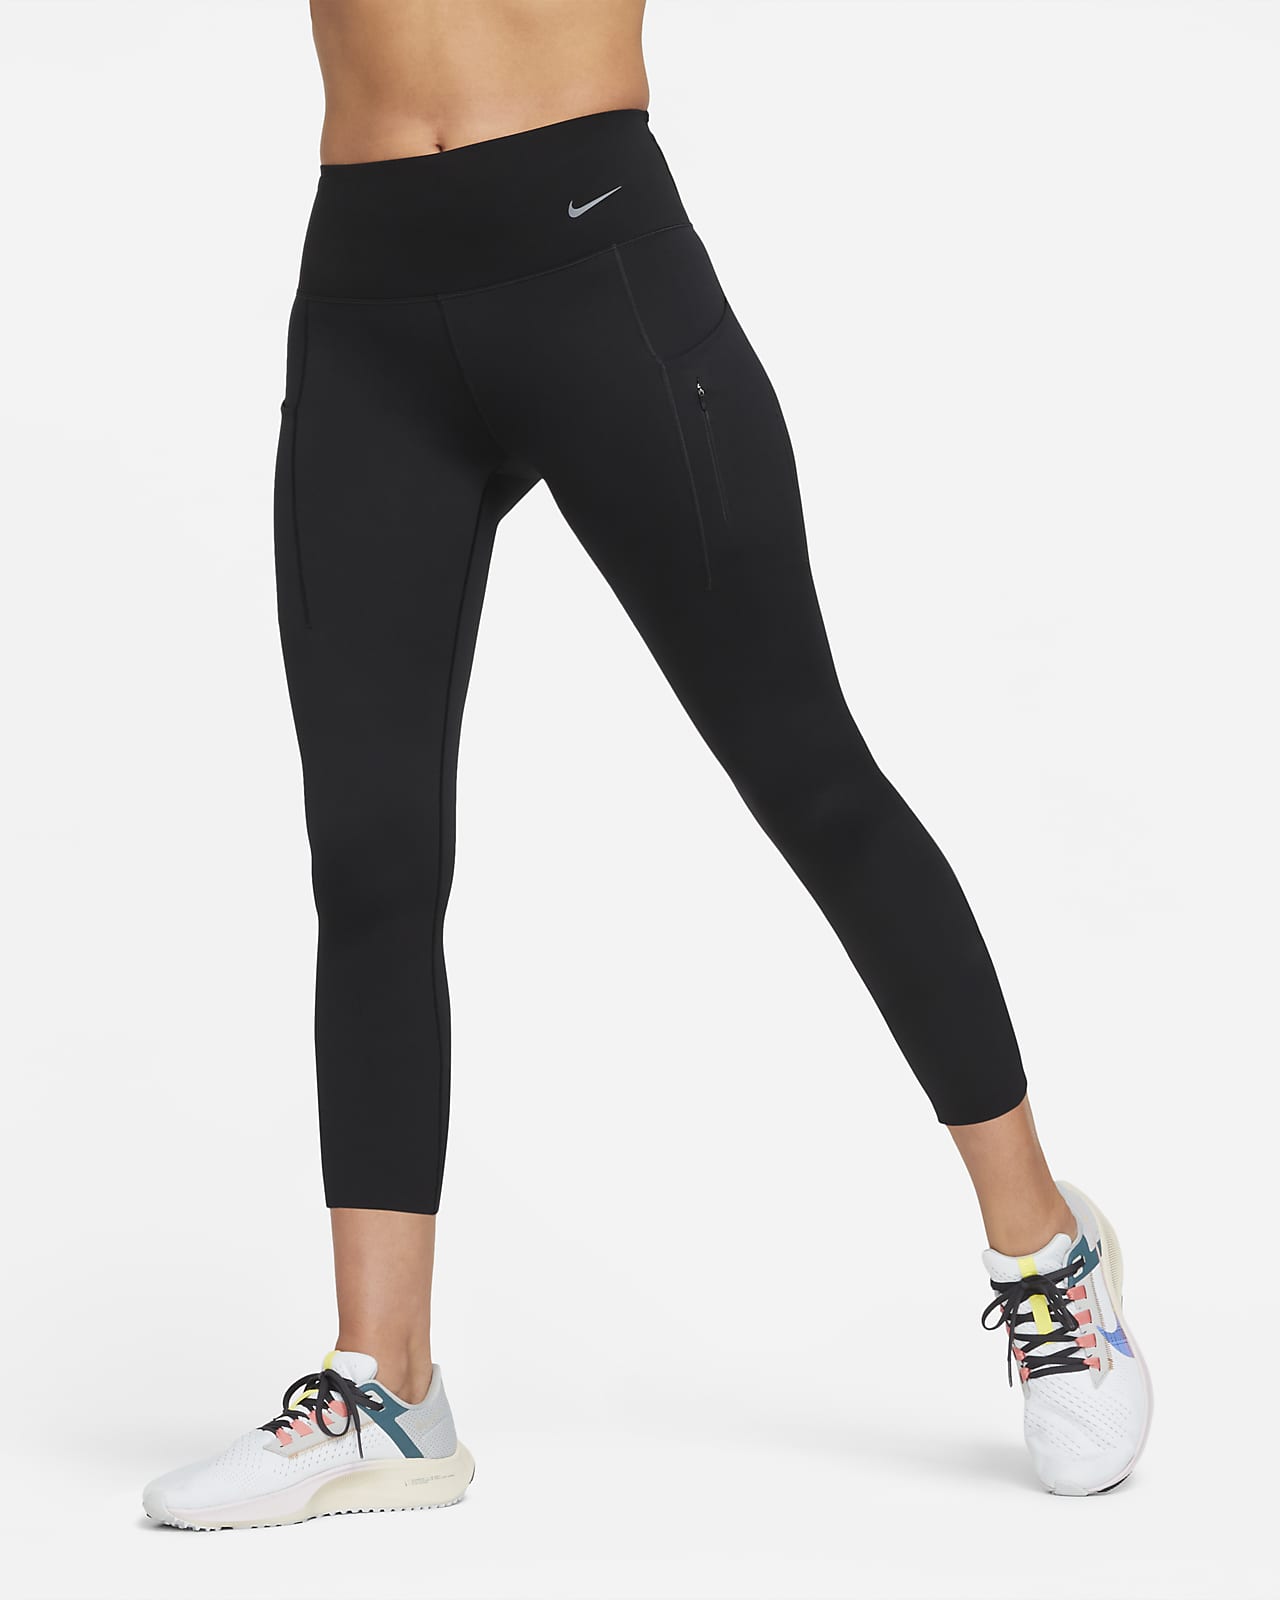 Nike leggings vita alta pantalone nero - Odolmo calzature - Pieve